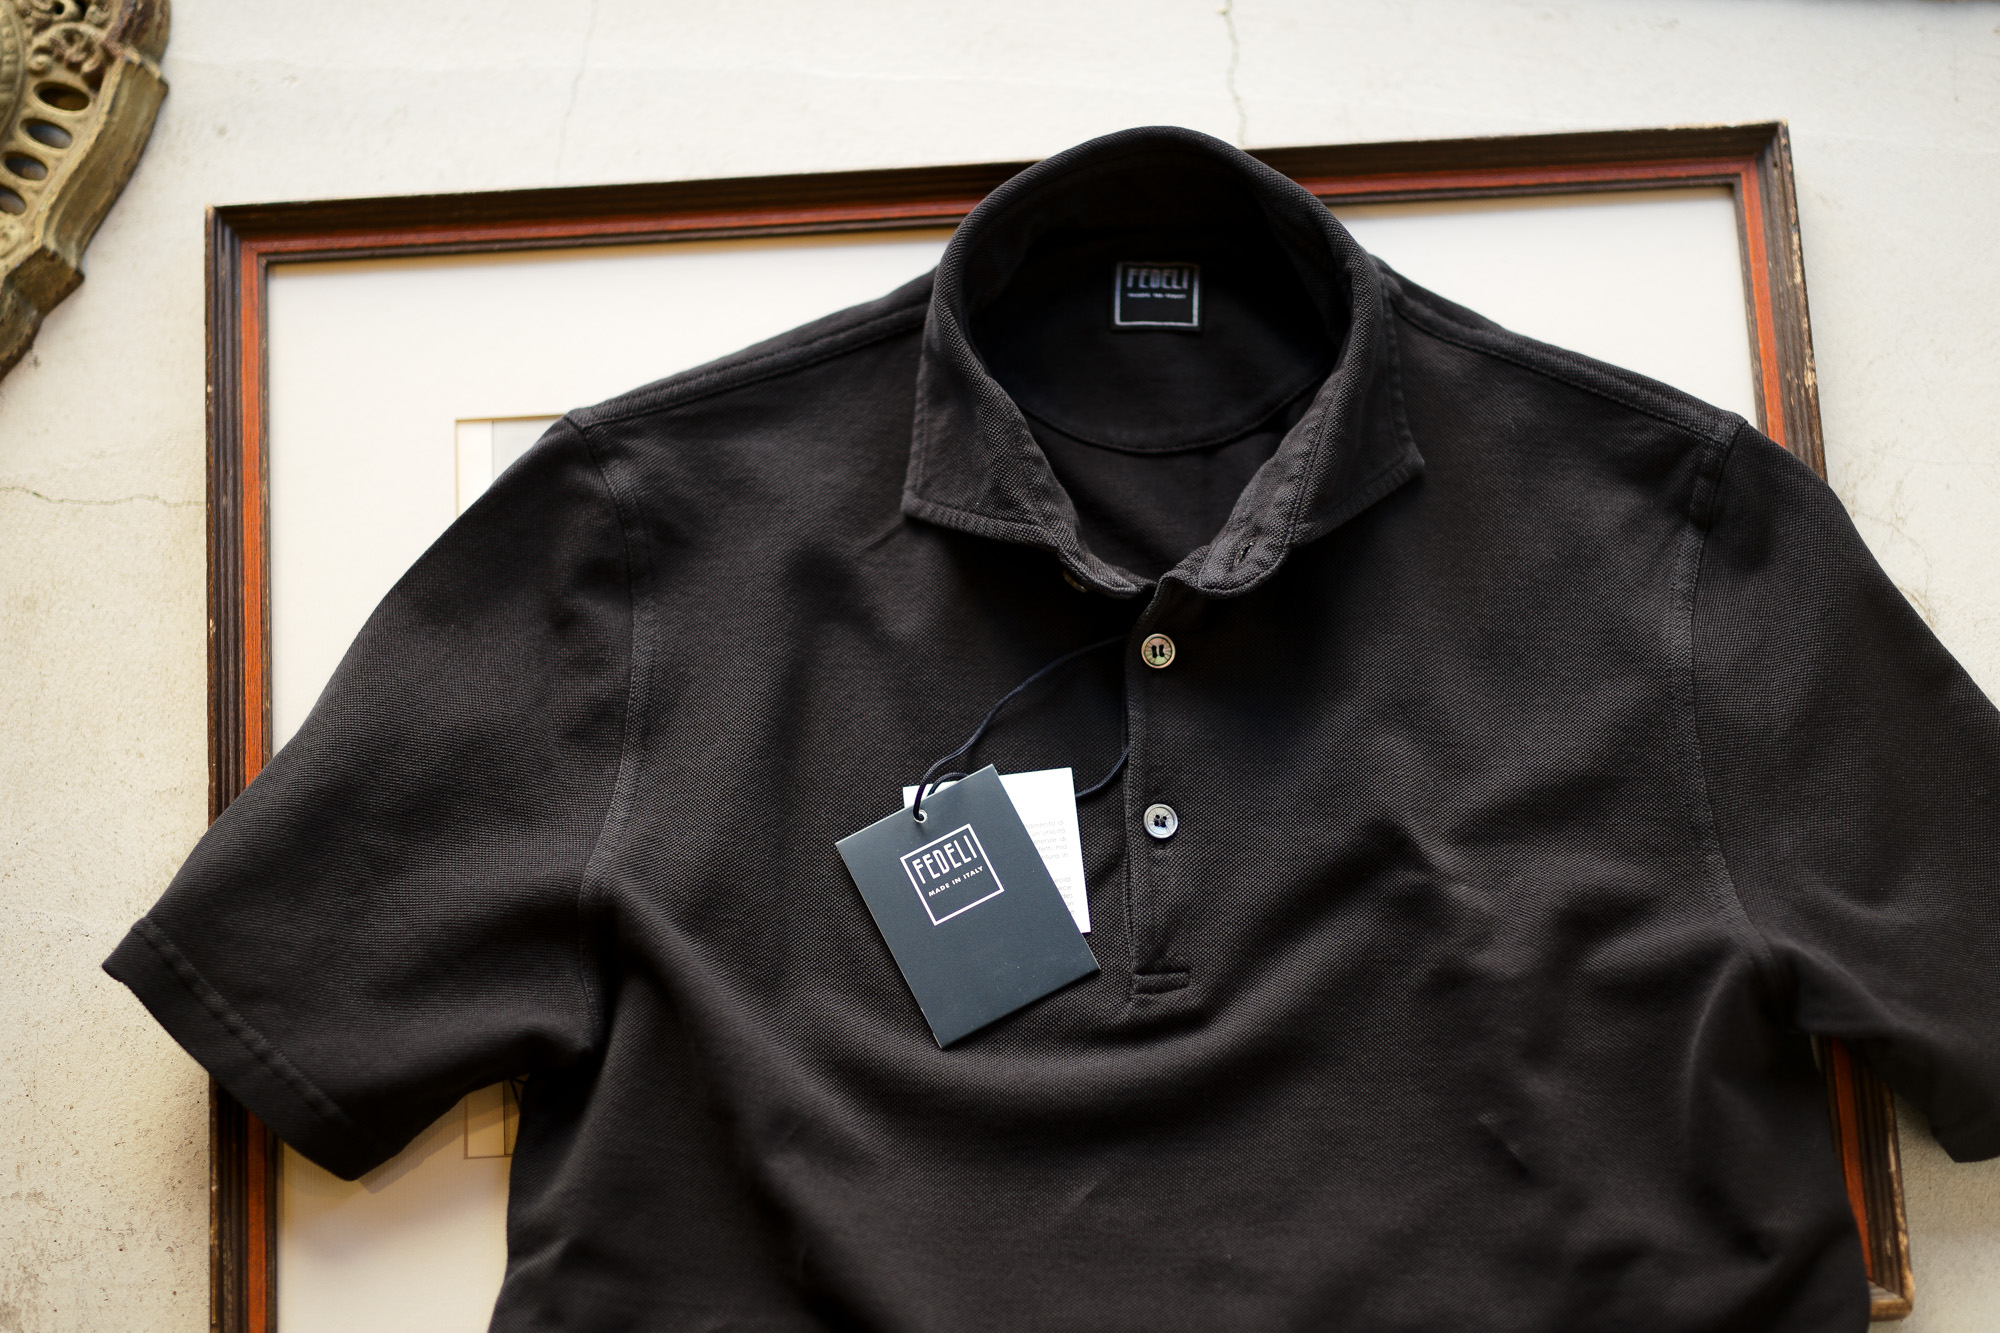 FEDELI(フェデーリ) Piquet Polo Shirt (ピケ ポロシャツ) カノコ ポロシャツ BLACK (ブラック・36) made in italy (イタリア製)2020 春夏 【ご予約受付中】 愛知 名古屋 altoediritto アルトエデリット ポロ